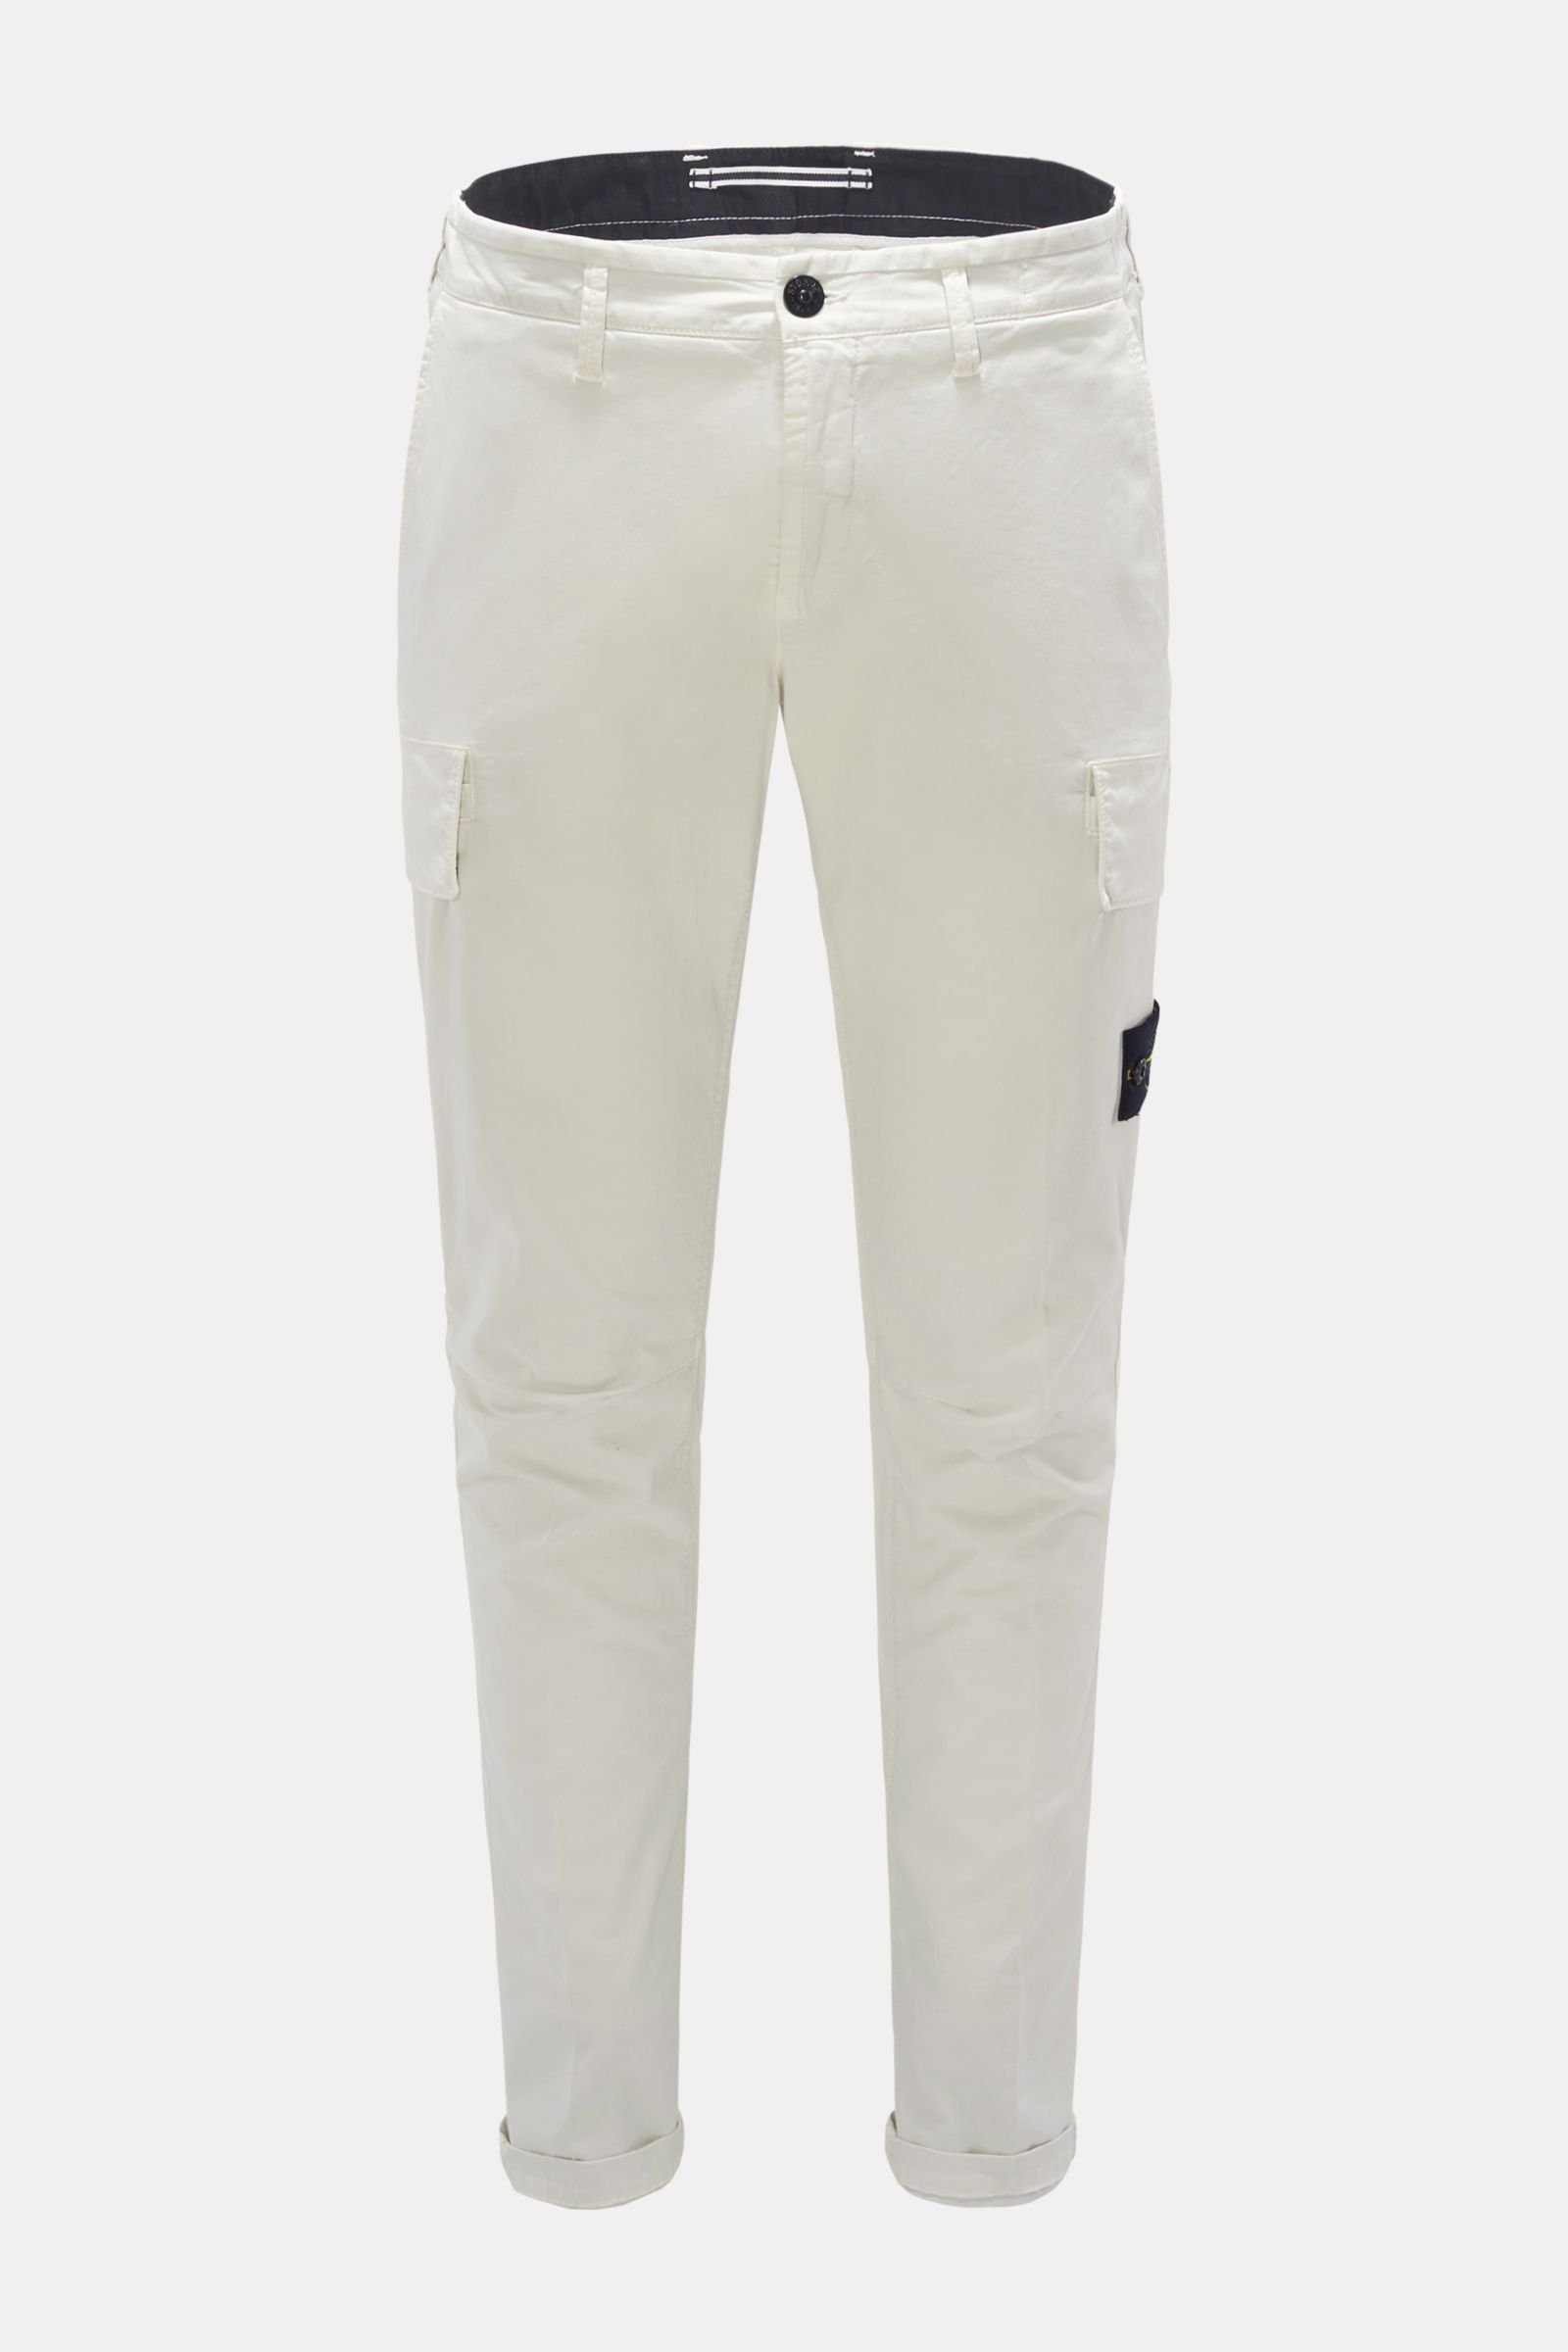 STONE ISLAND cargo trousers off-white | BRAUN Hamburg